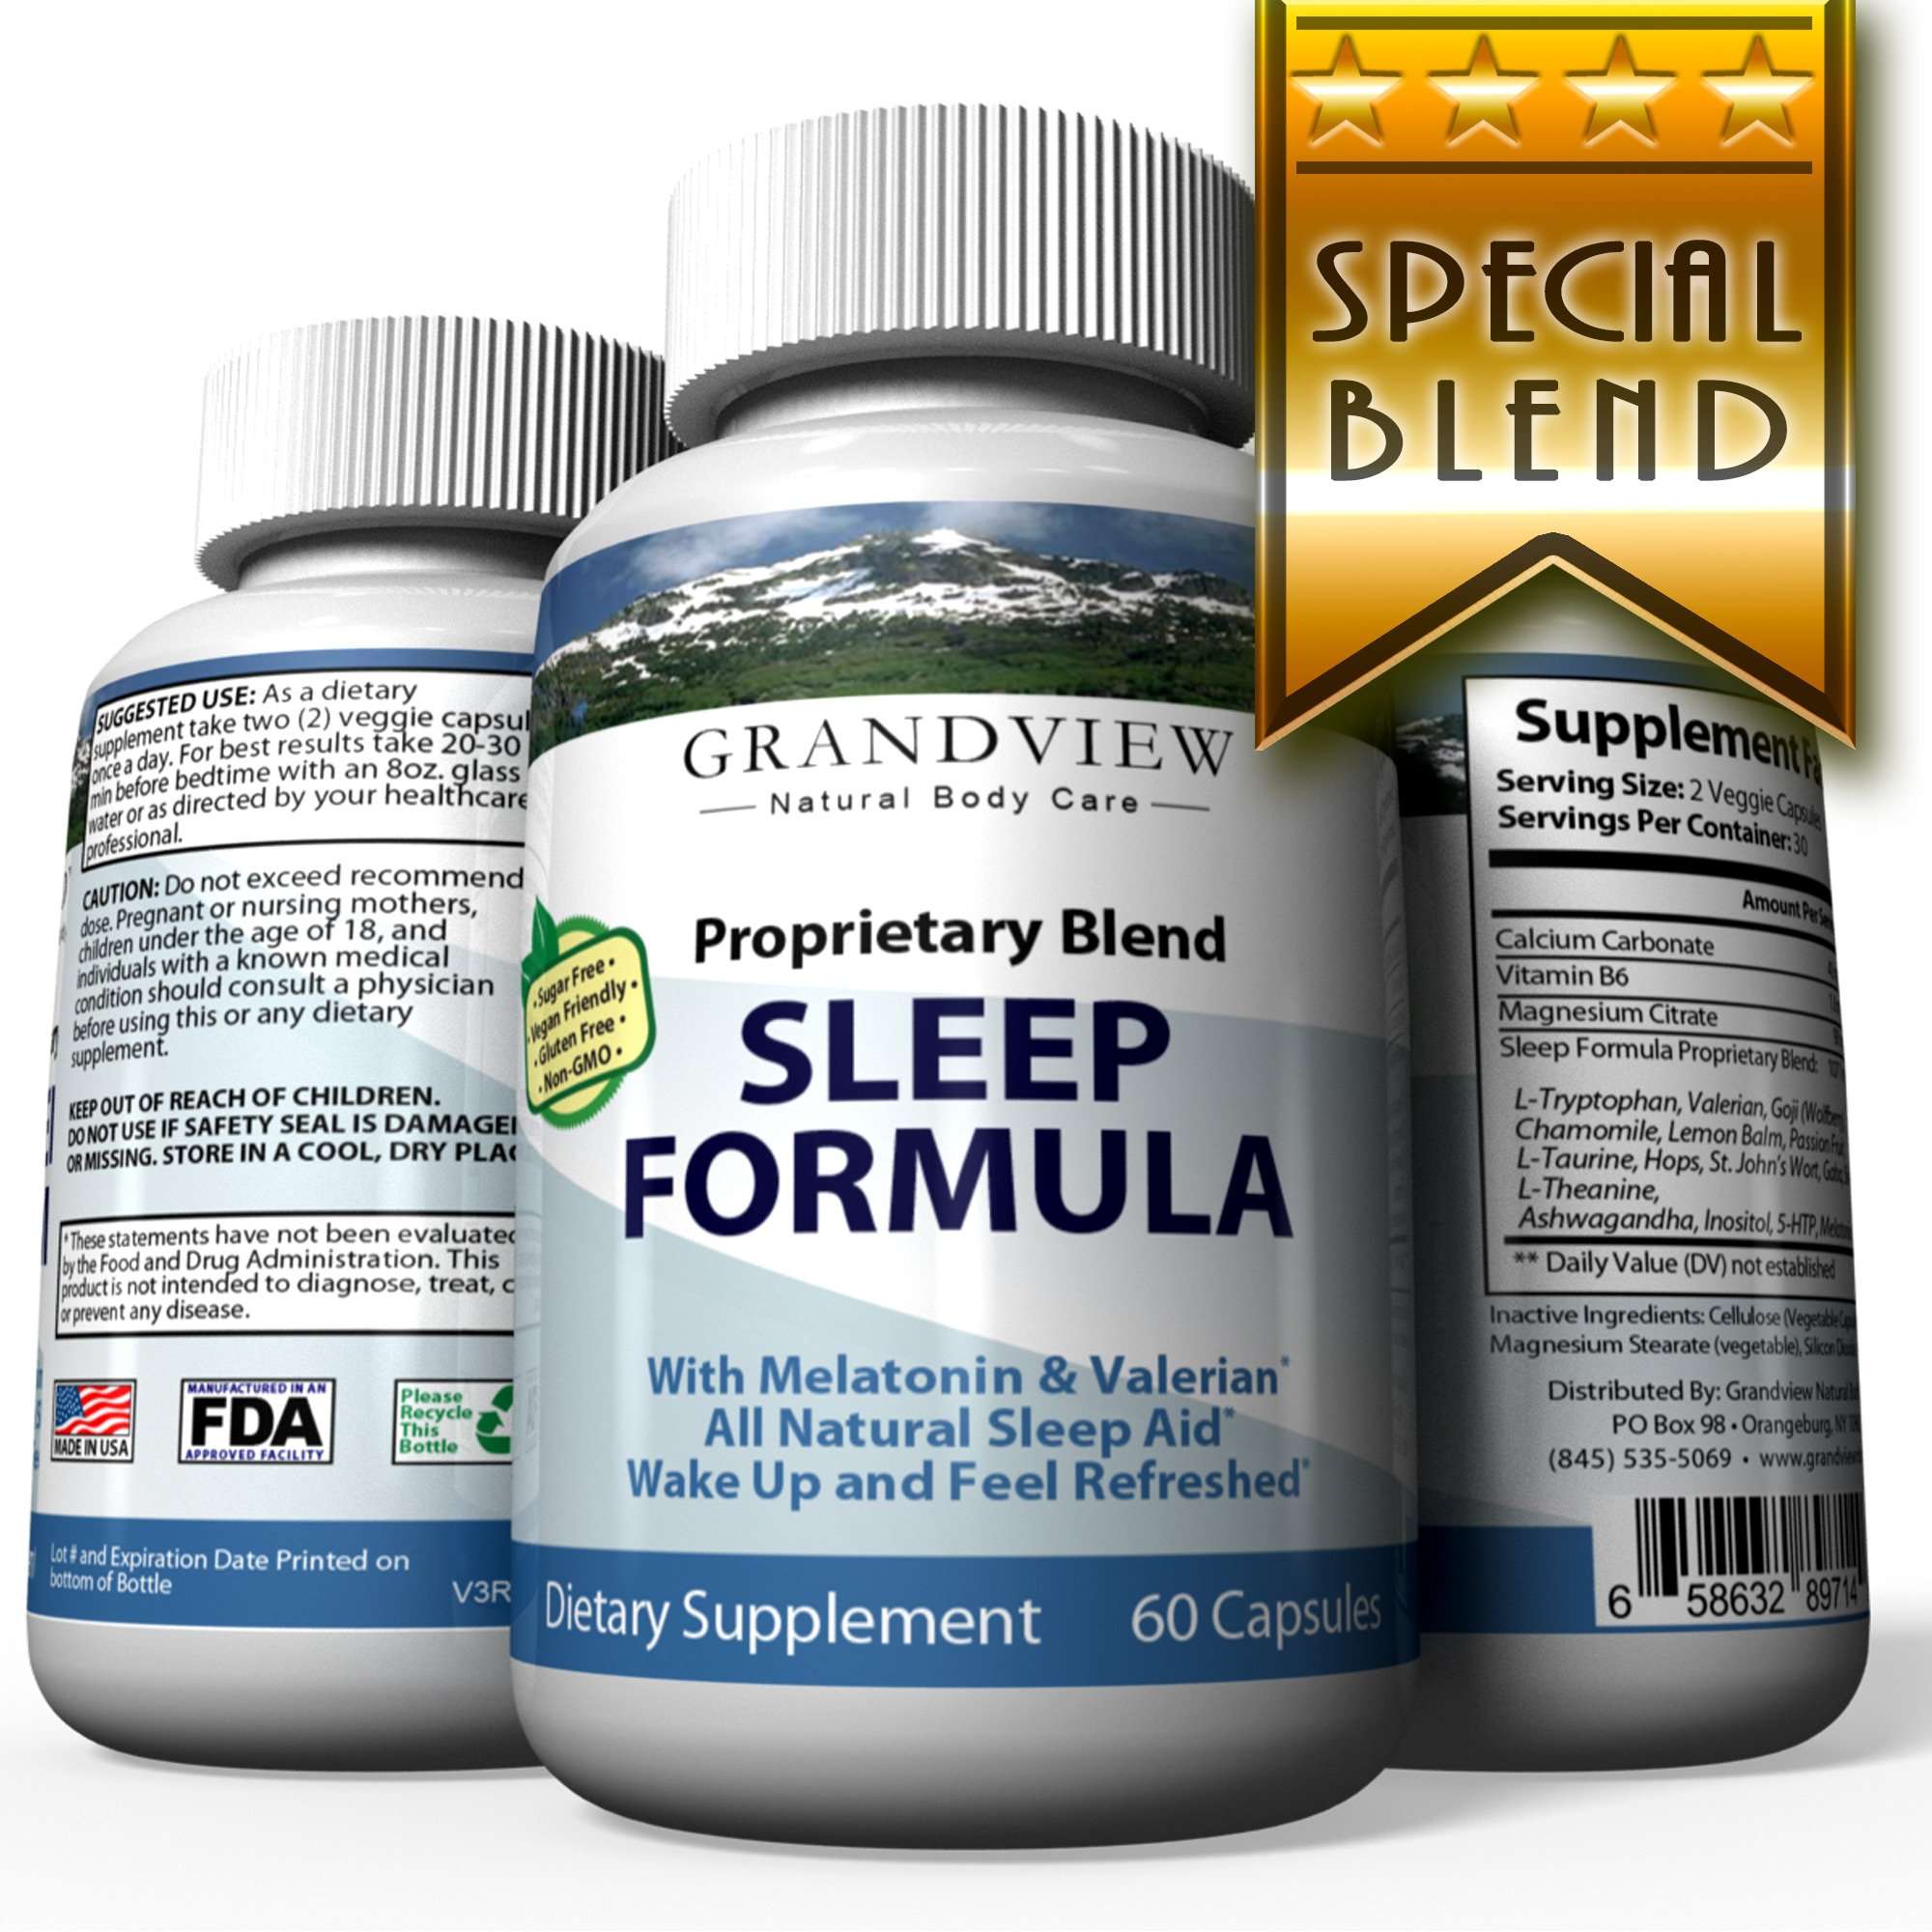 Natural Sleep Aid Is An All